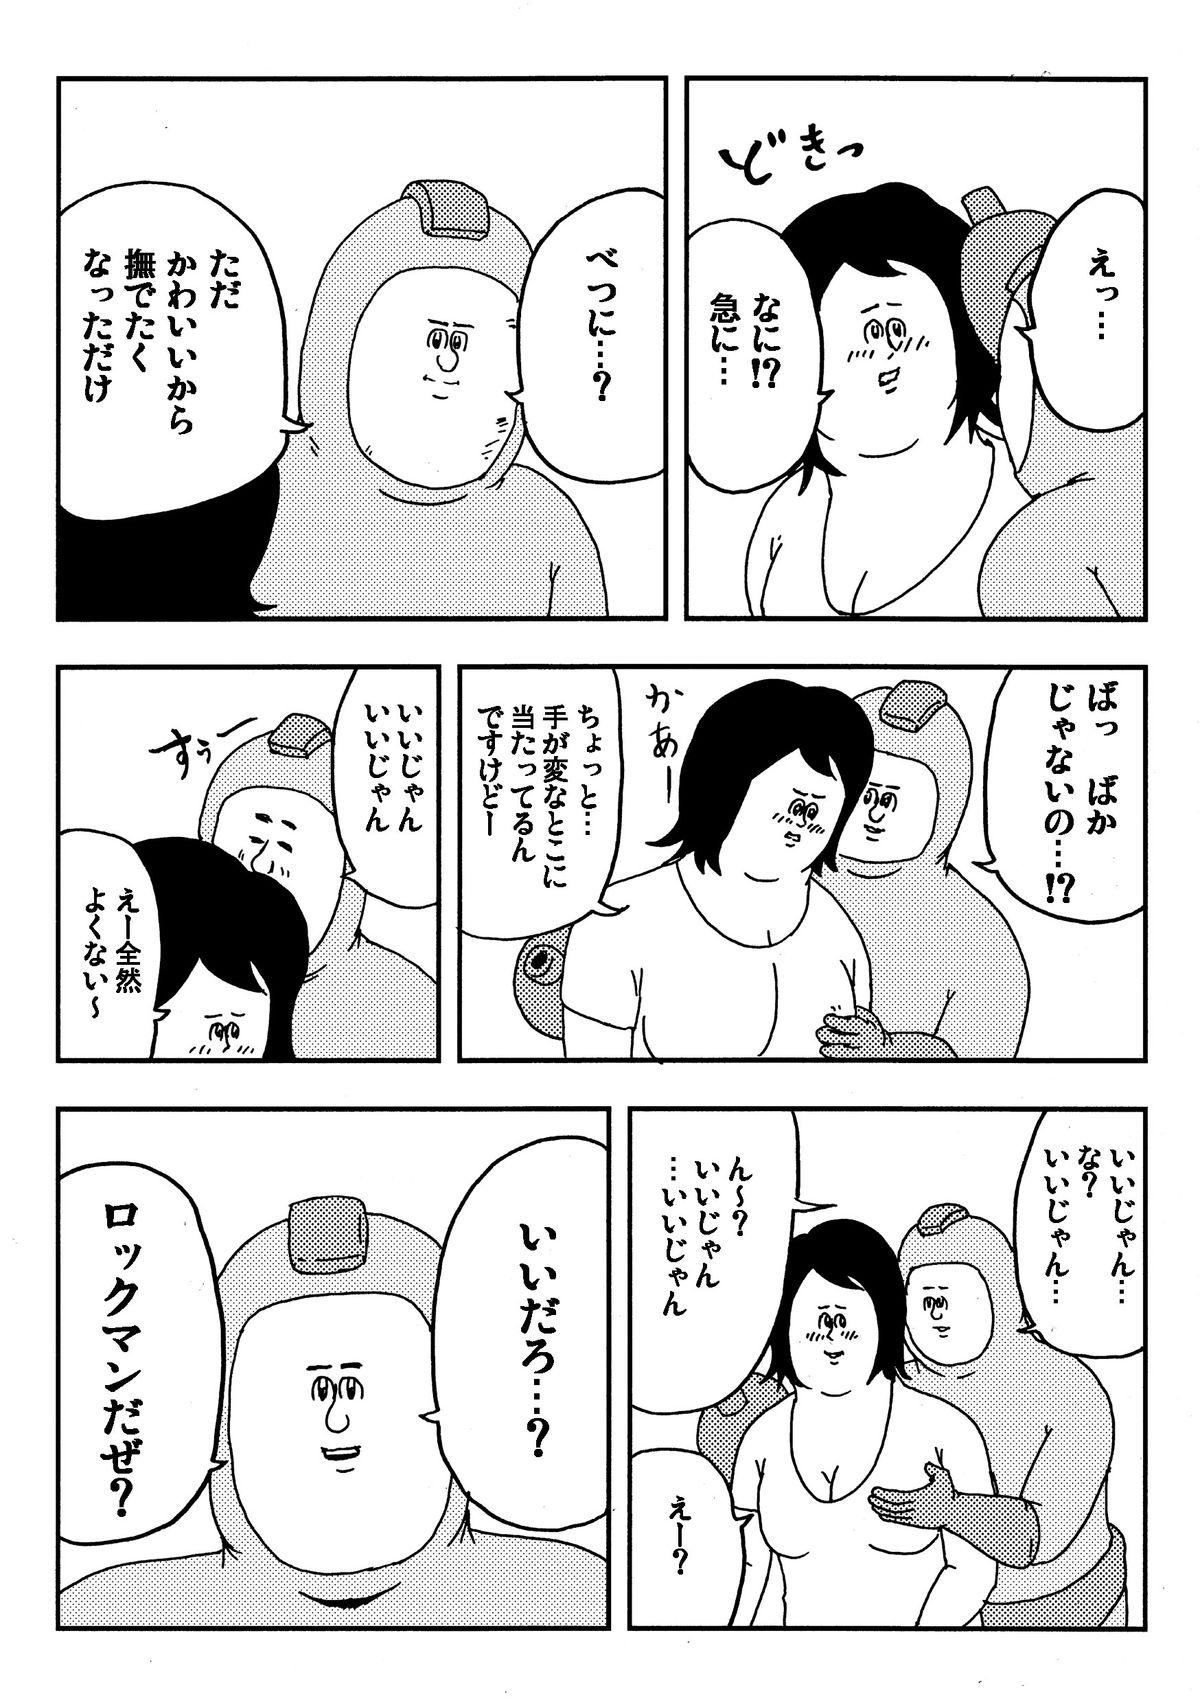 Gang Rockman no Erohon - Megaman Office - Page 5